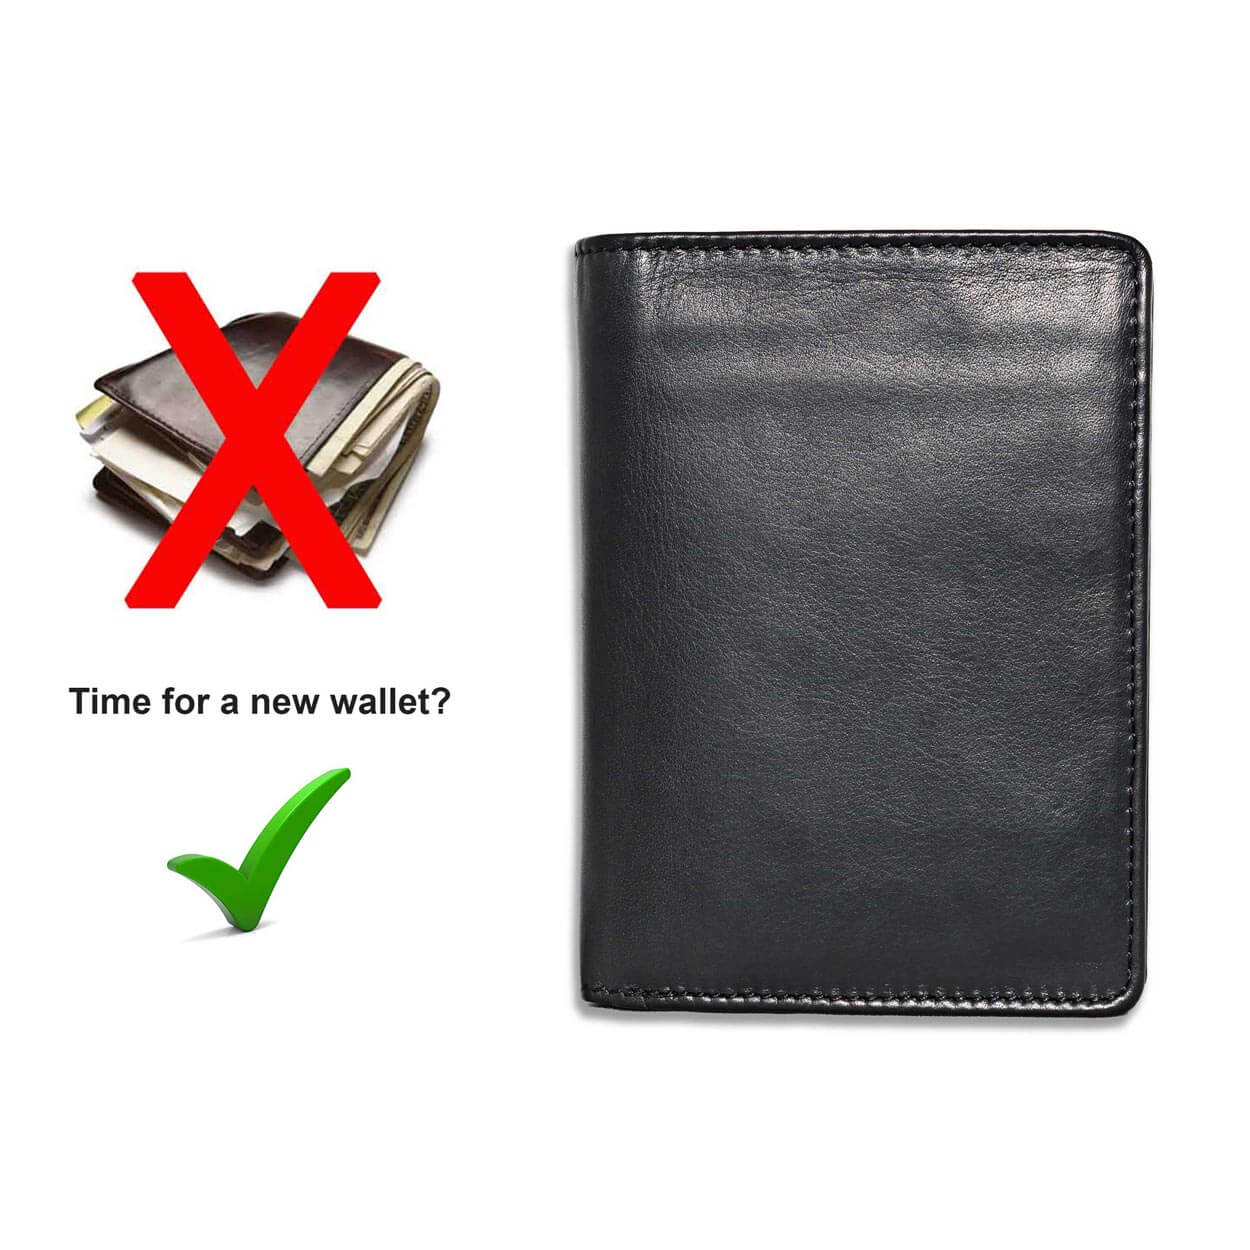 DiLoro Men's Large Bifold Leather Wallet 2.0 Vertical Black